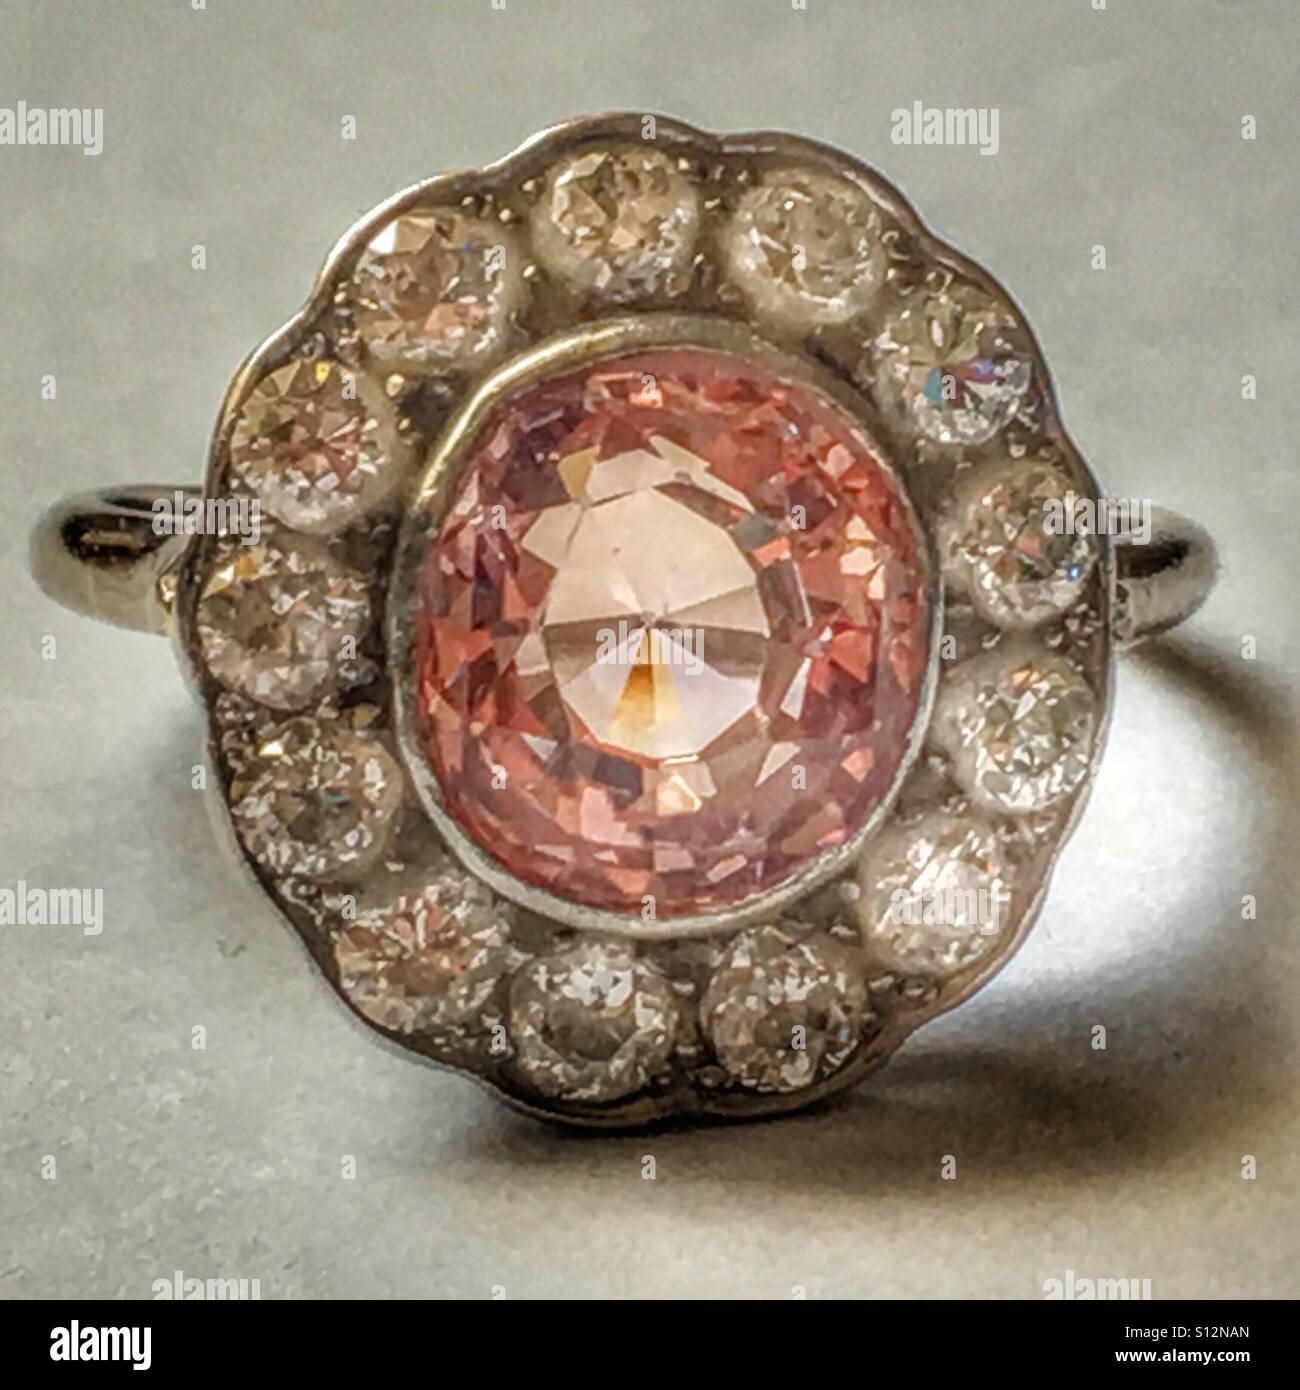 Pink sapphire and diamond ring Stock Photo